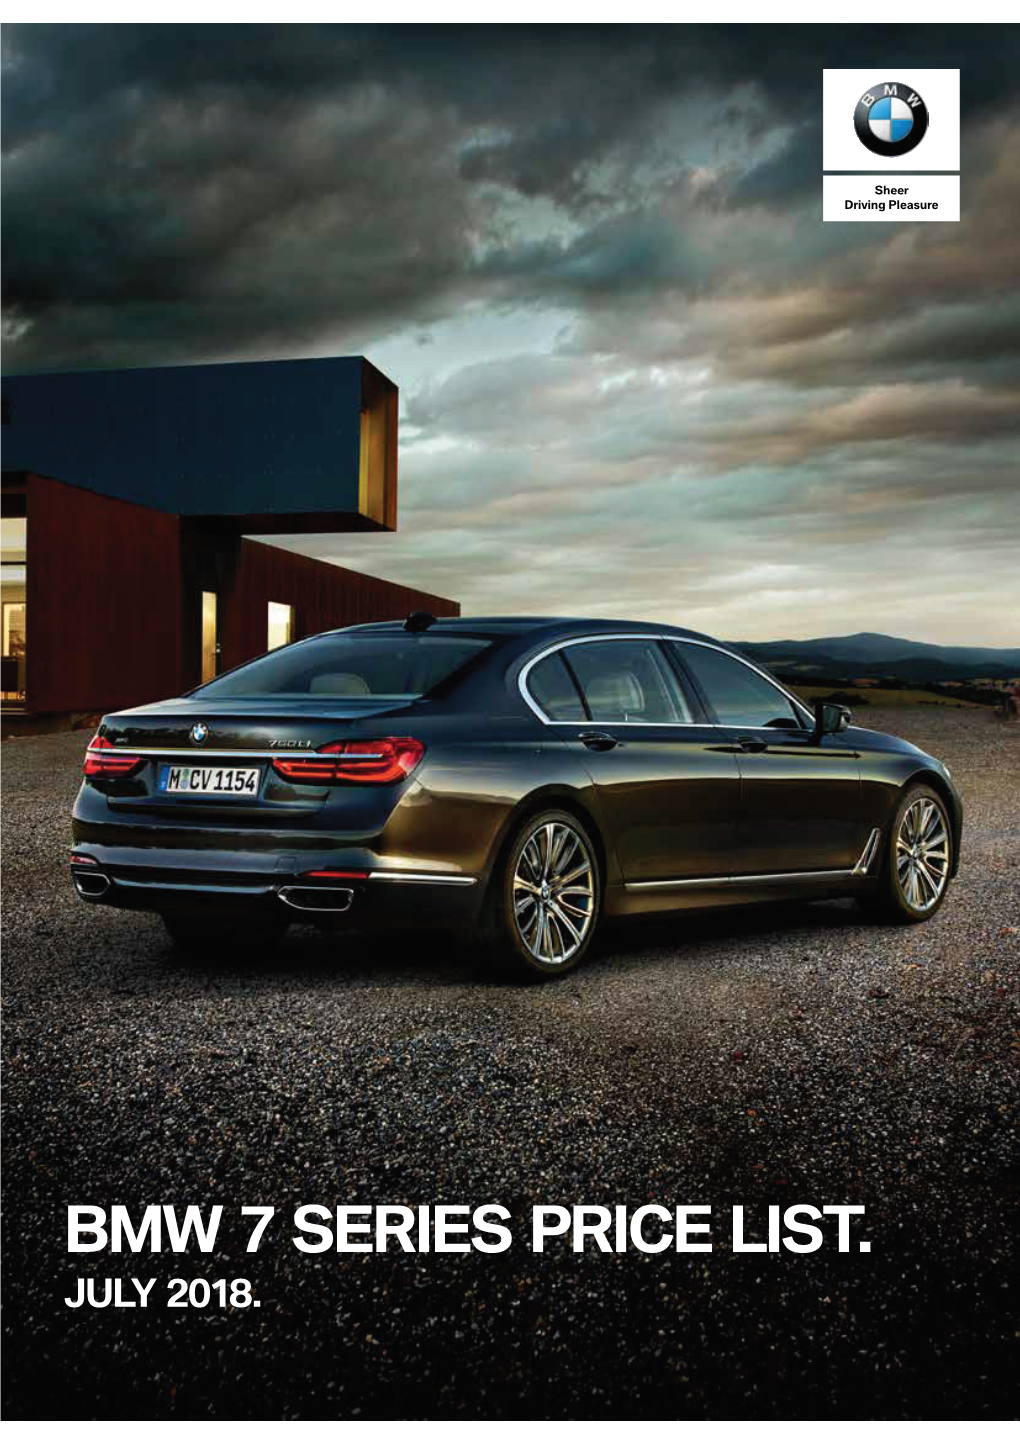 Bmw 7 Series Price List. July 2018